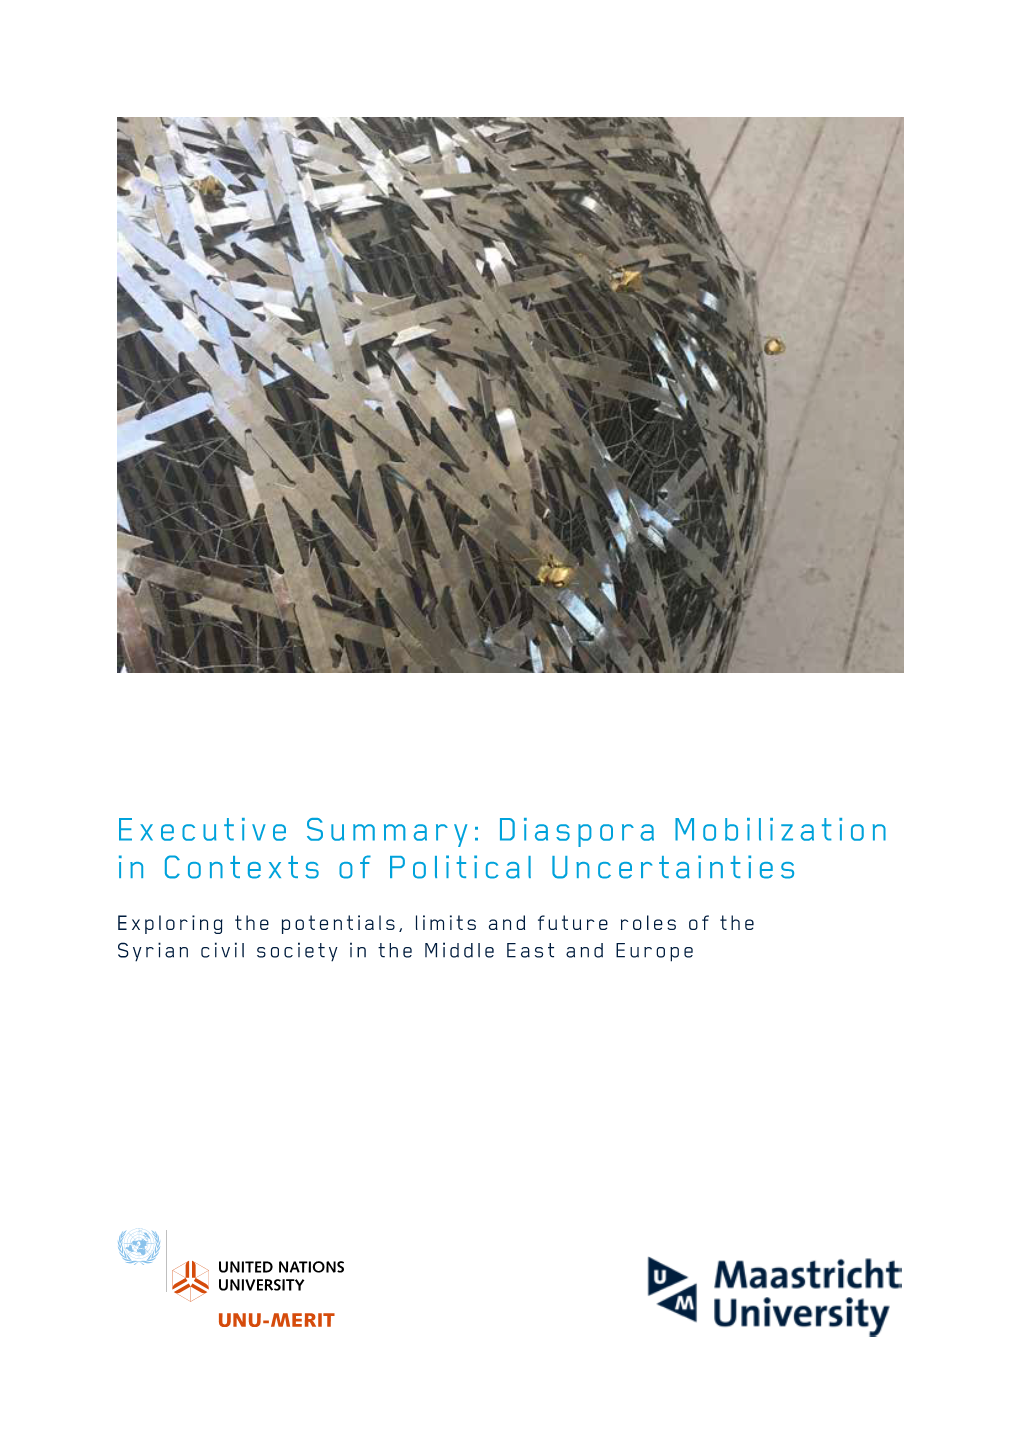 Executive Summary: Diaspora Mobilization in Contexts of Political Uncertainties